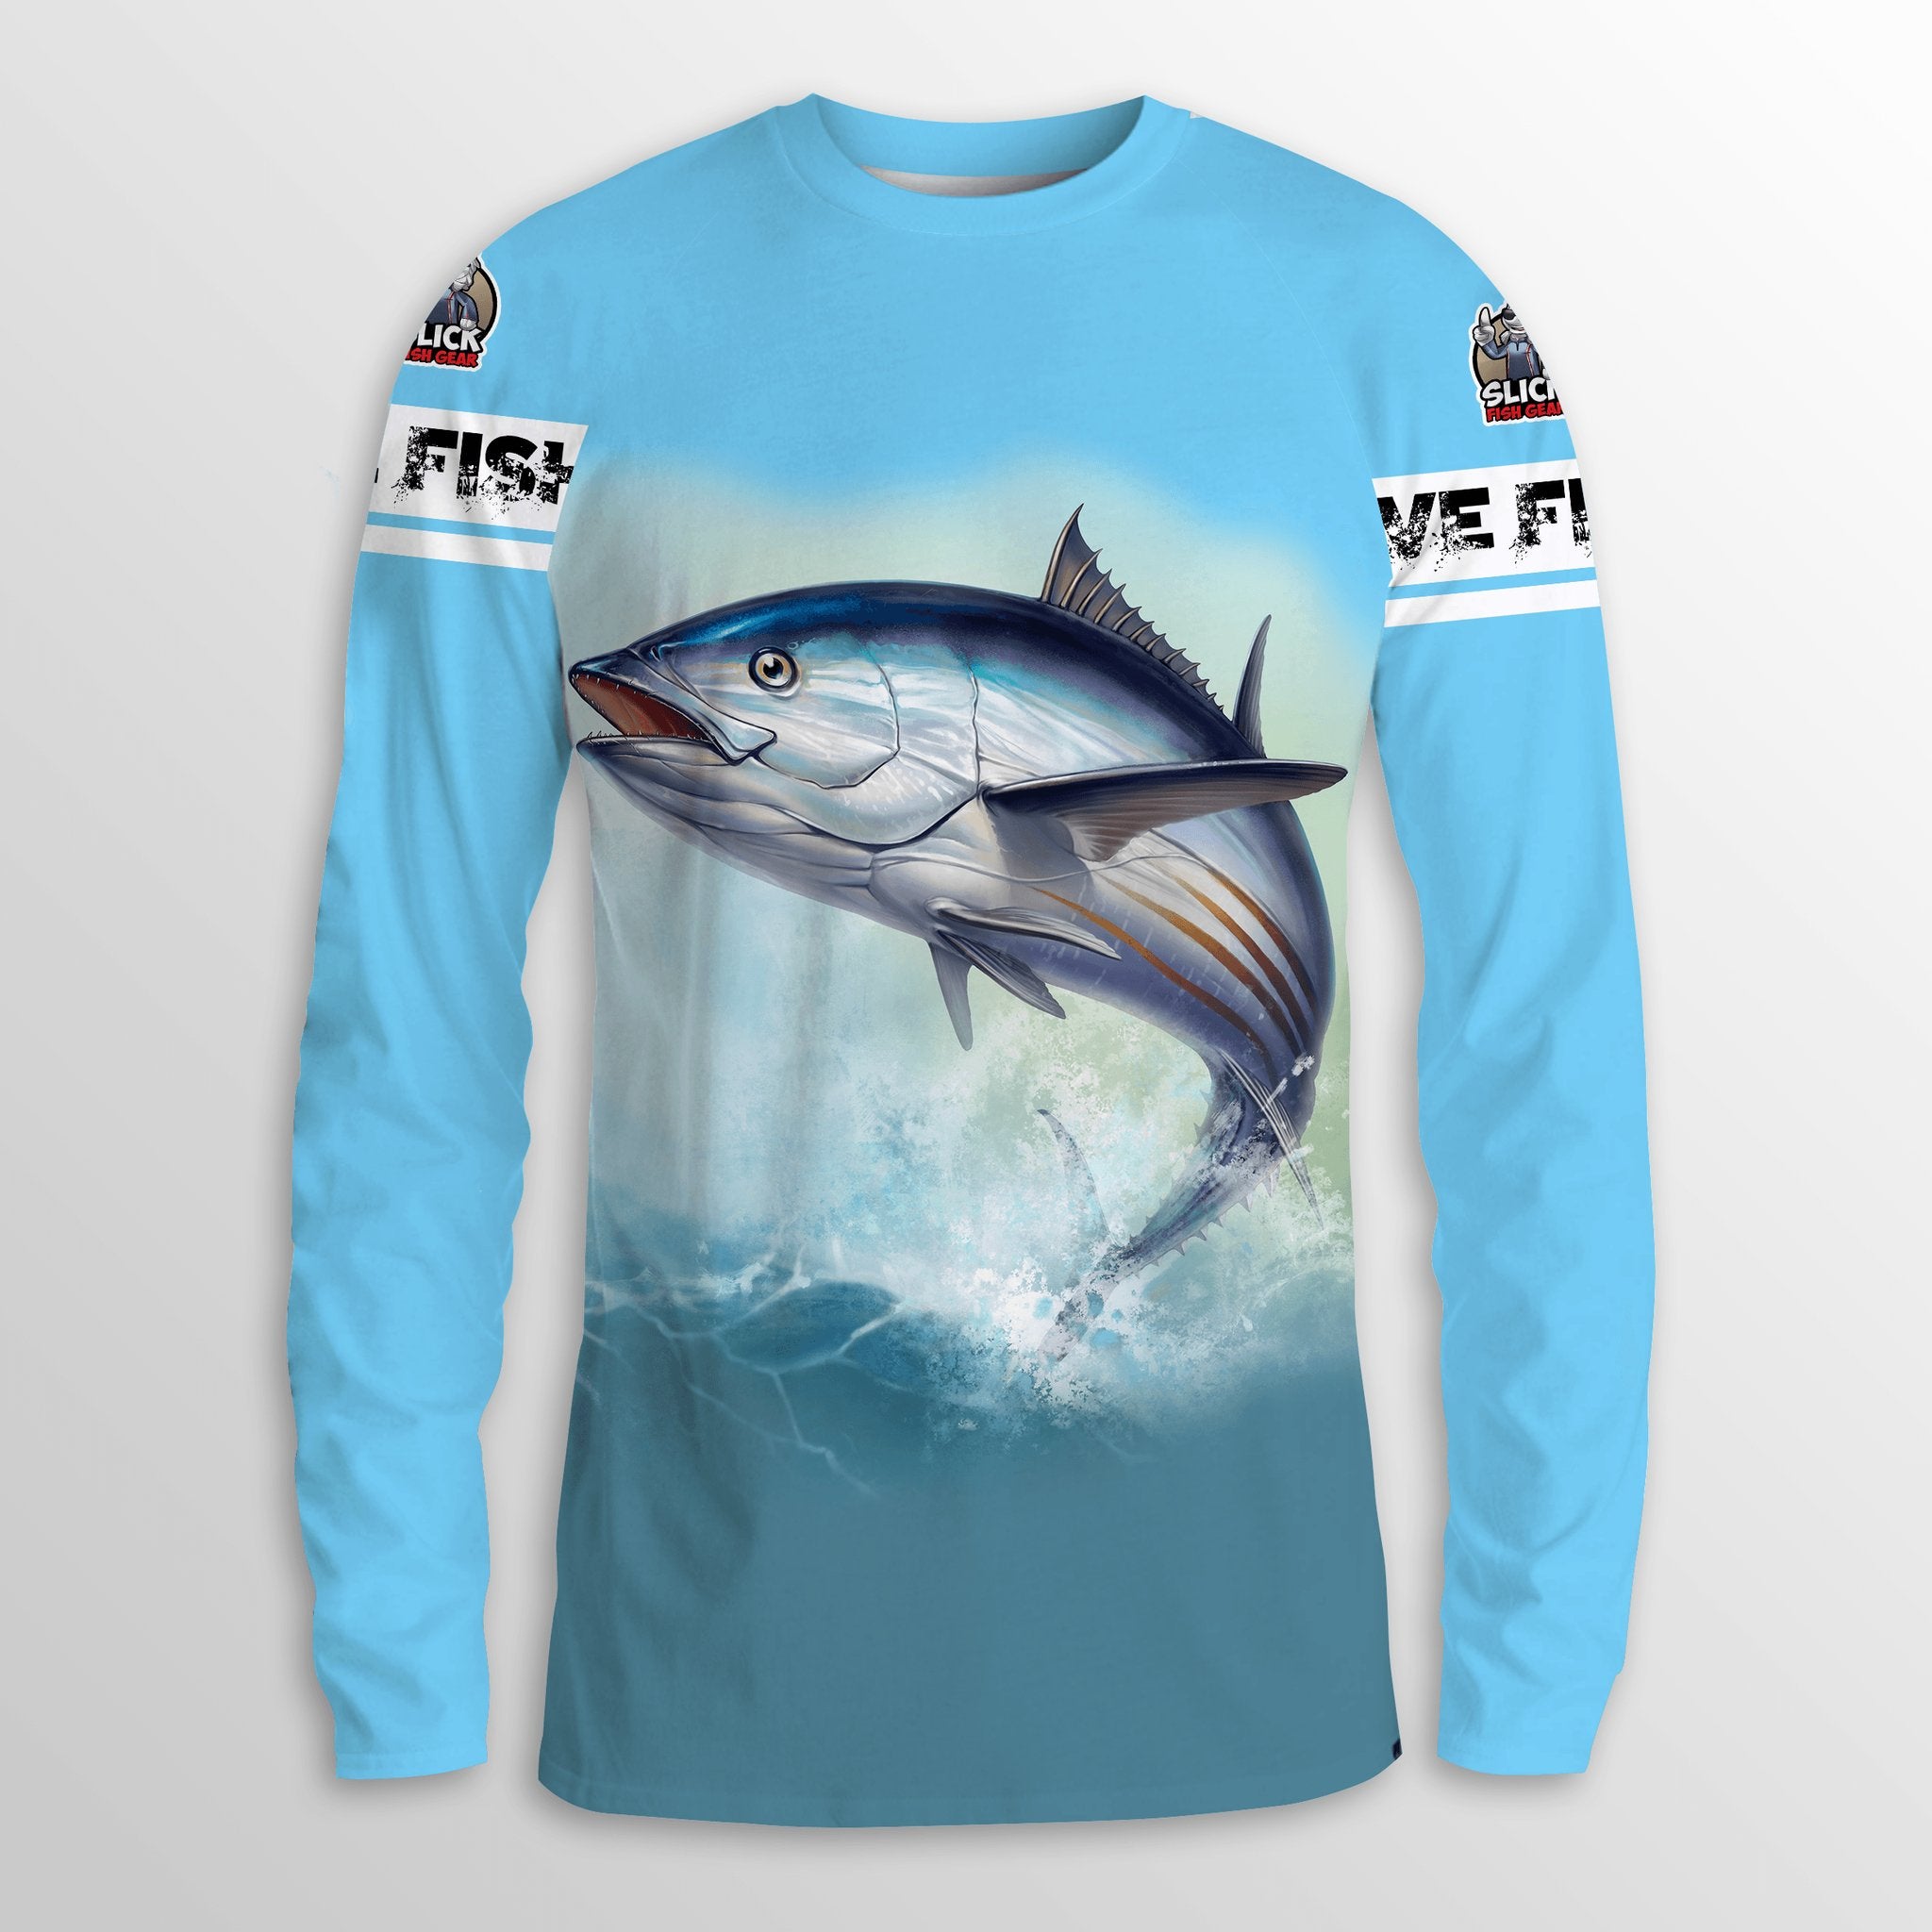 Tuna Retro Vintage Shirt, Gift for Fishermen, Tuna Fishing Shirt